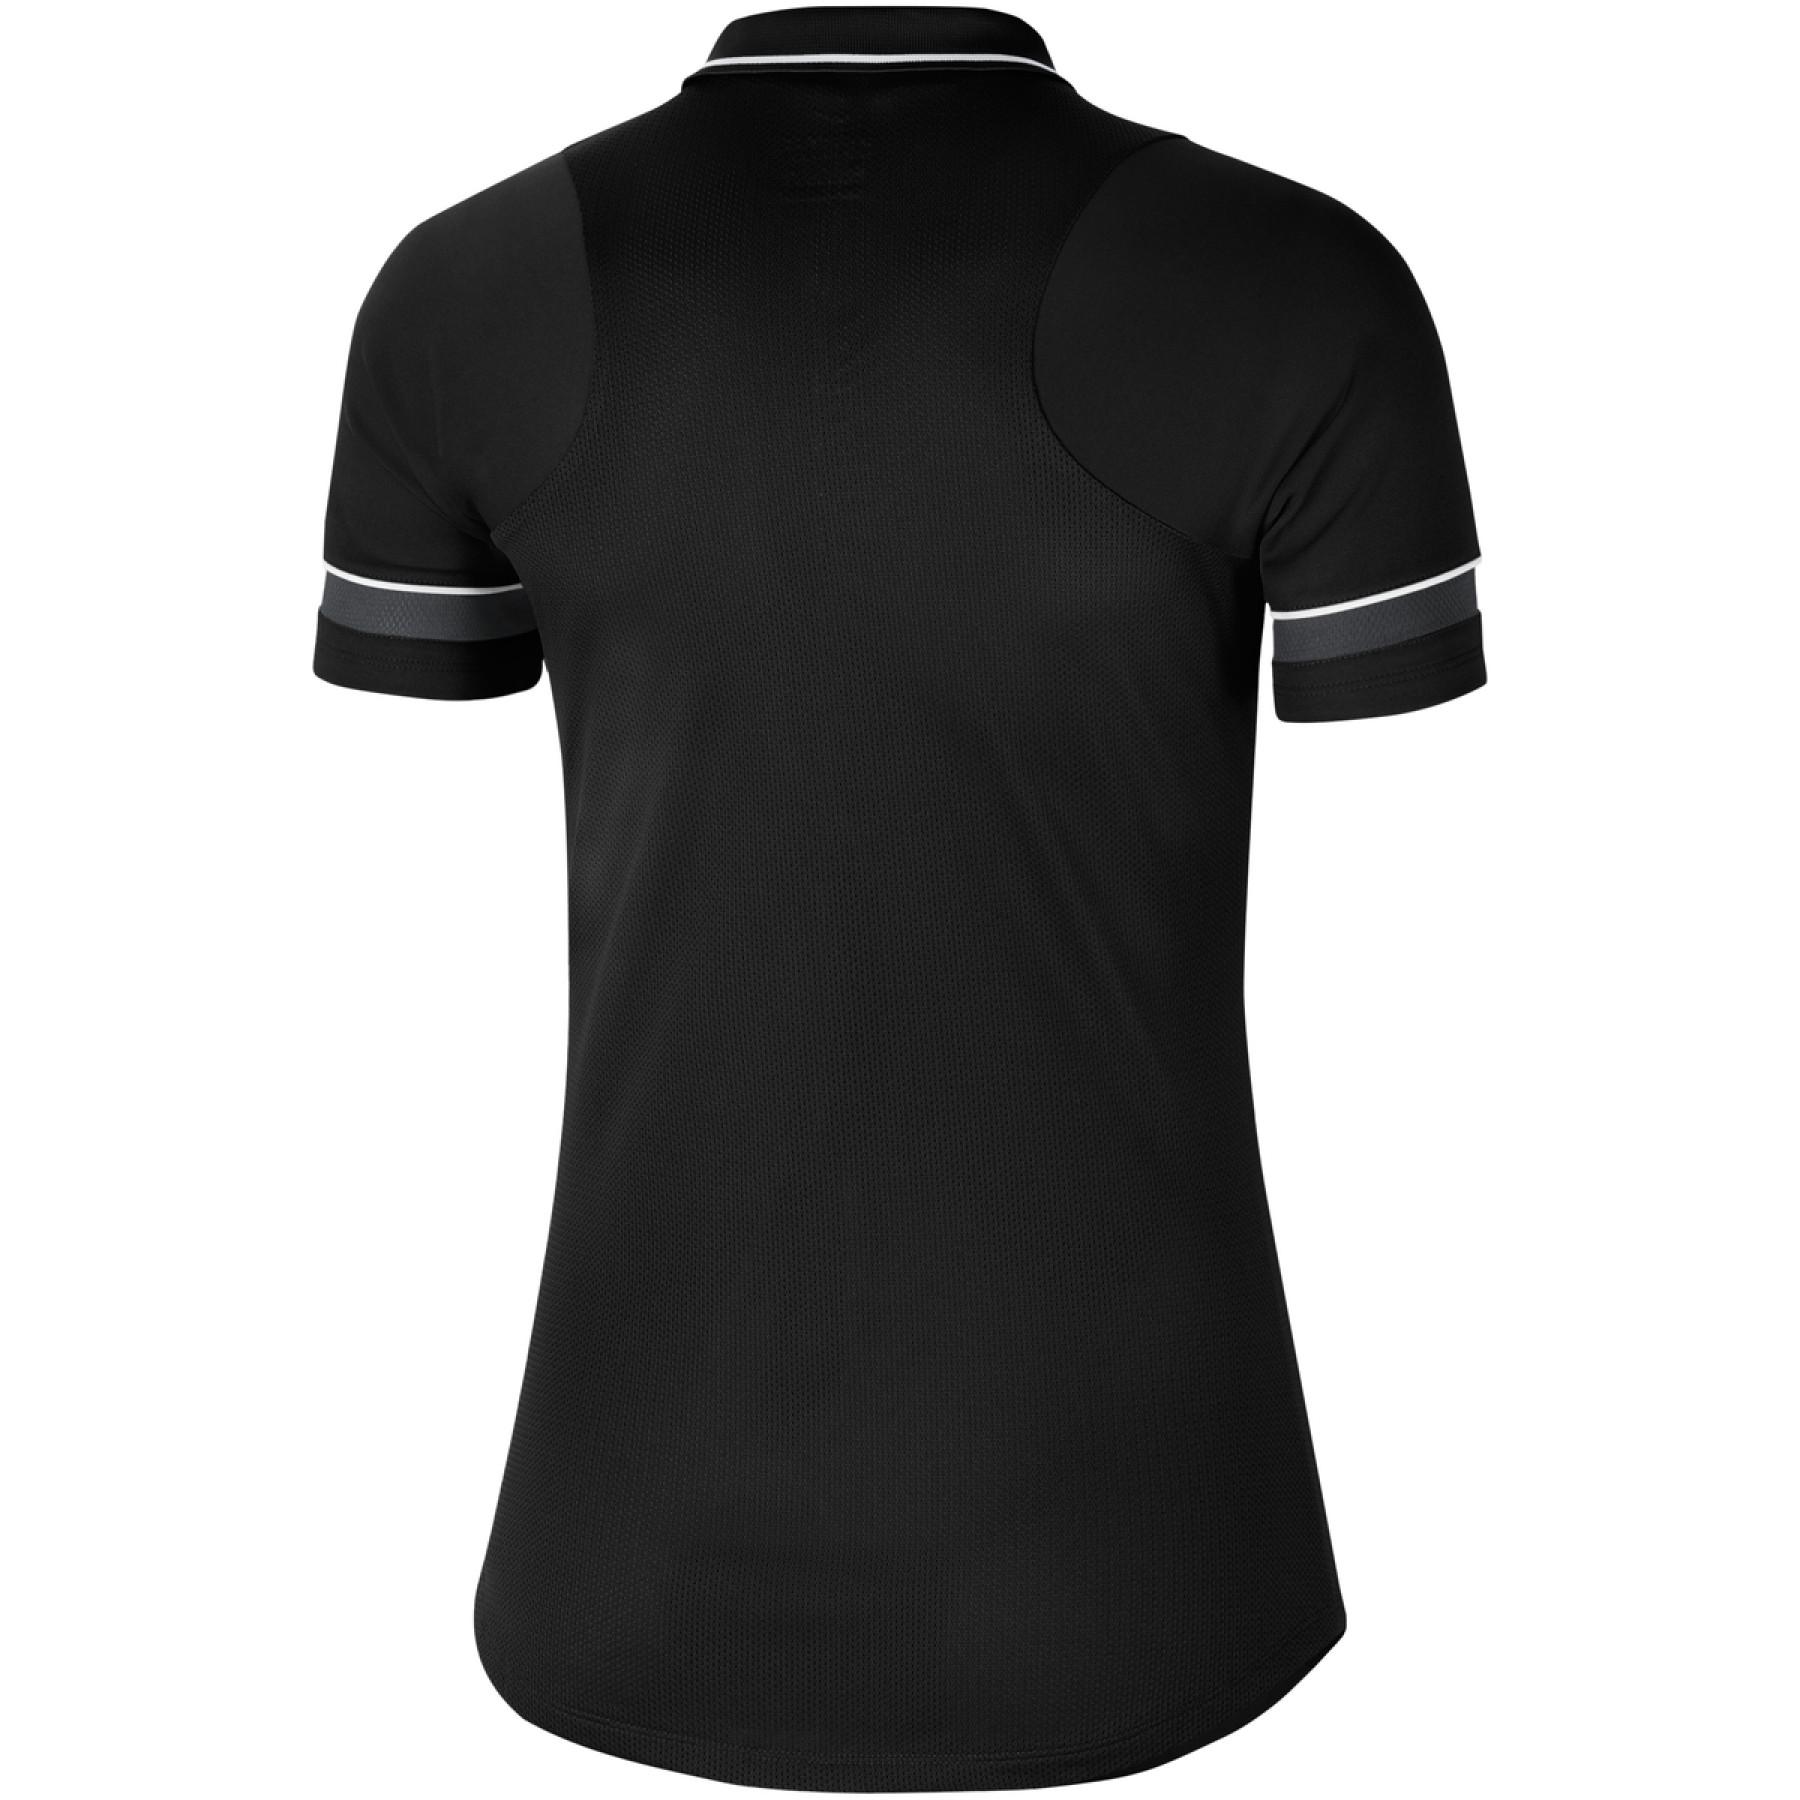 Women's polo shirt Nike Dri-FIT Academy